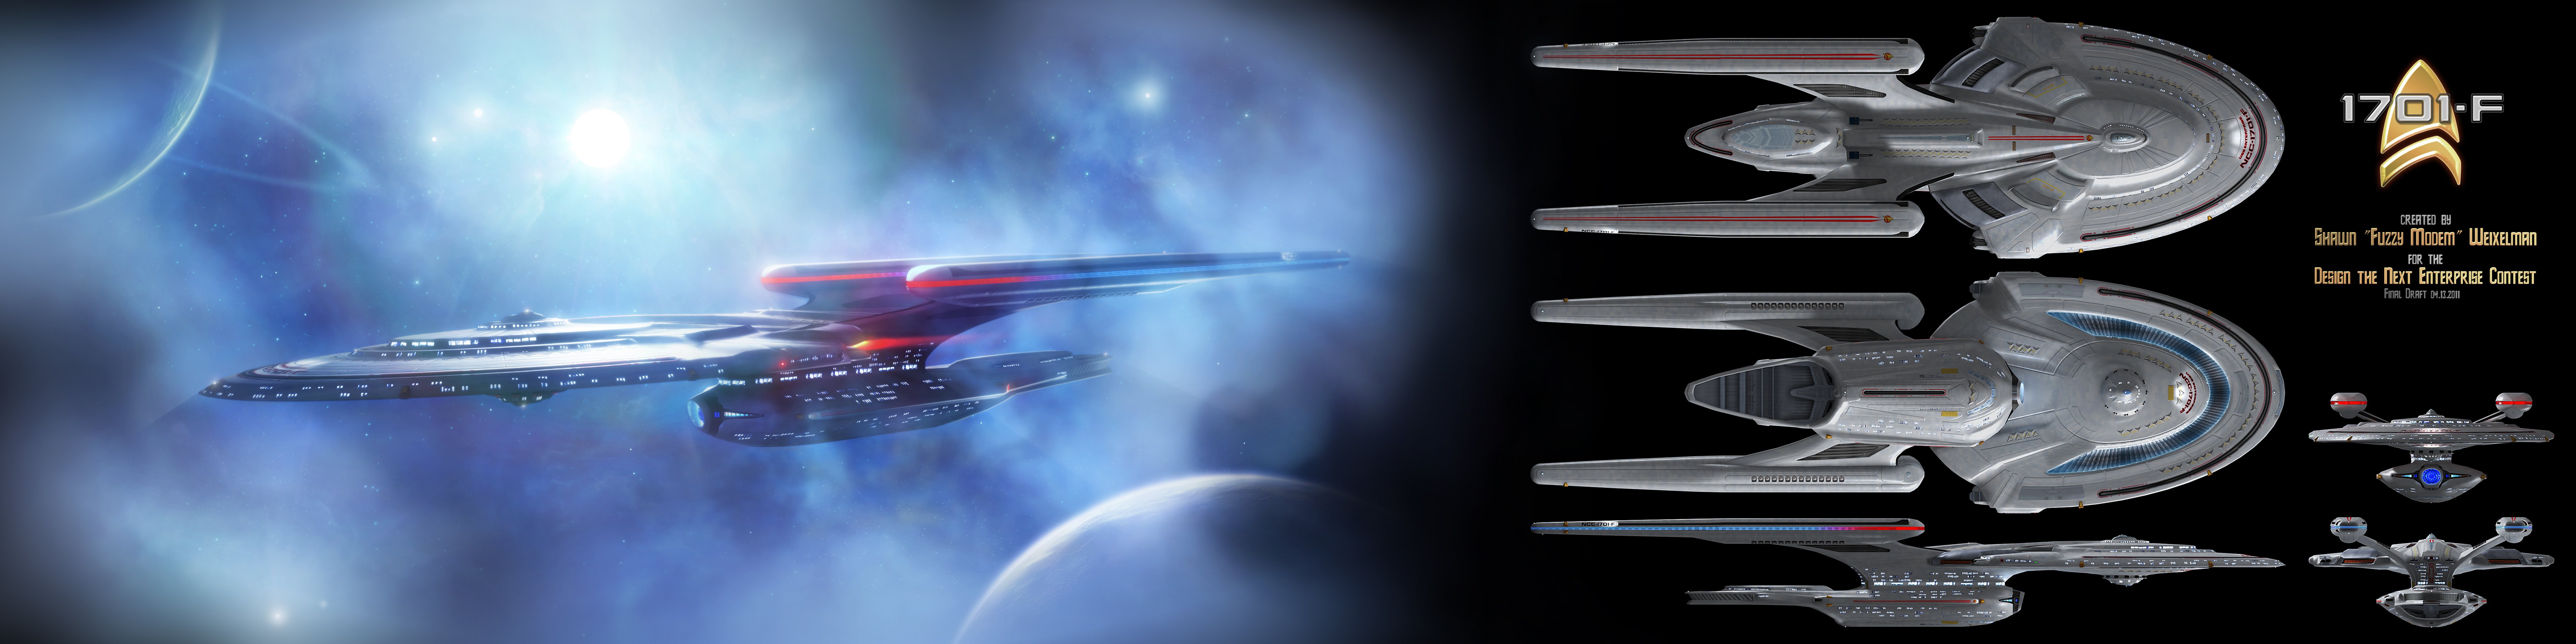 STAR TREK ONLINE game sci-fi futuristic spaceship wallpaper ...